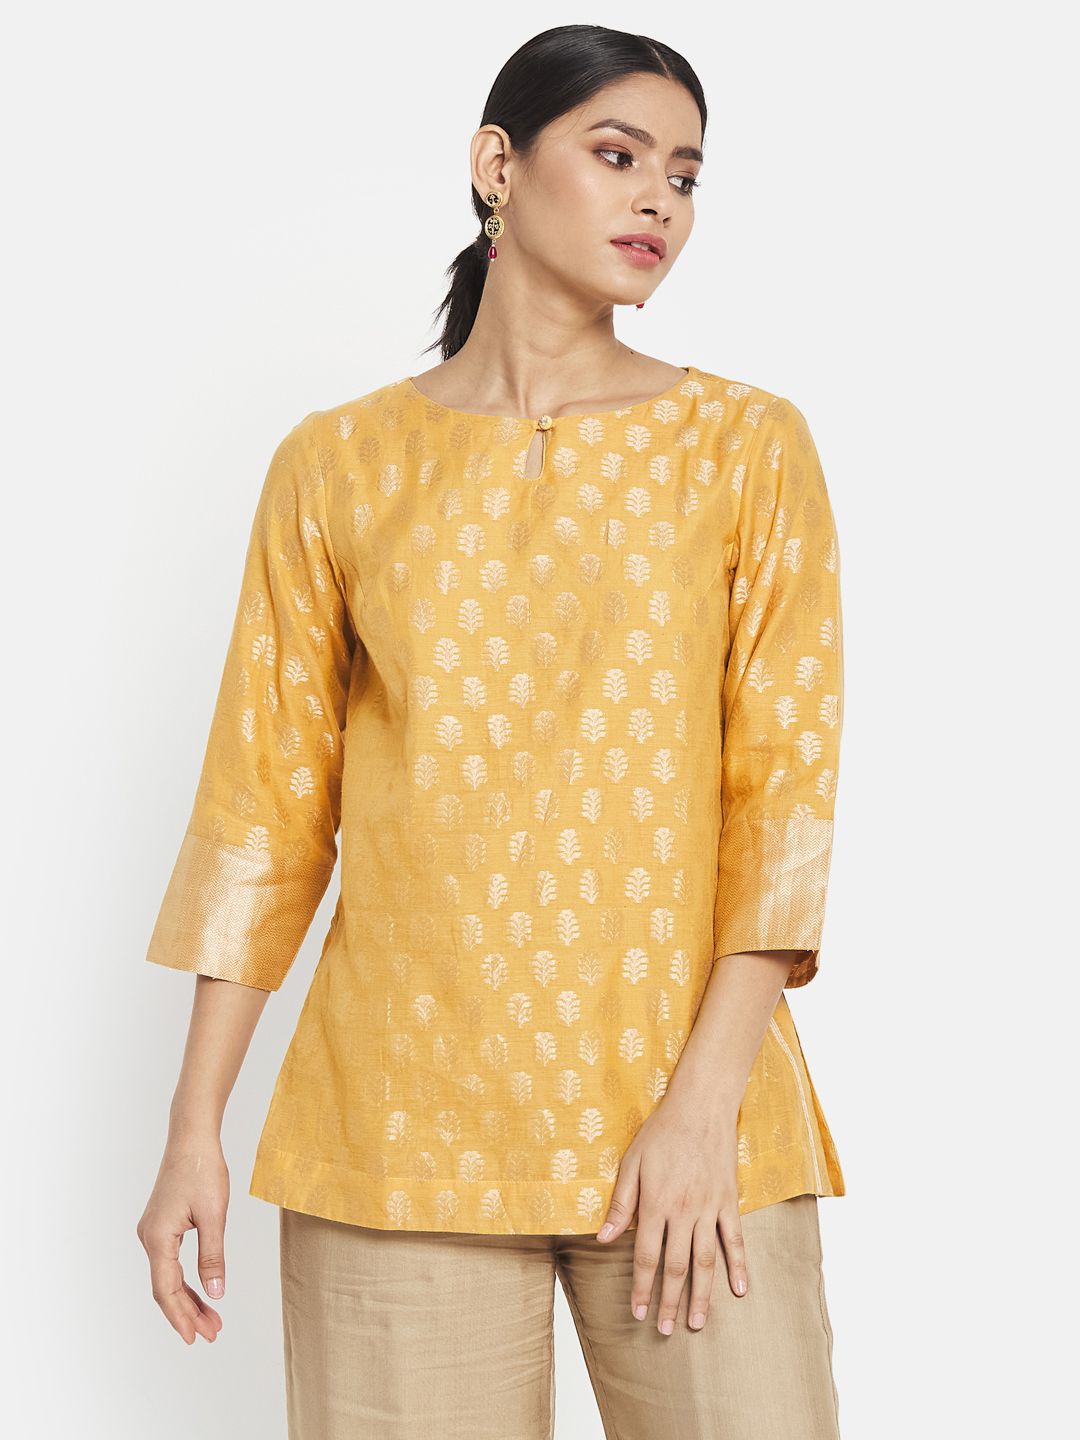 Fabindia Yellow & Golden Ethnic Motifs Woven Design Kurti Price in India